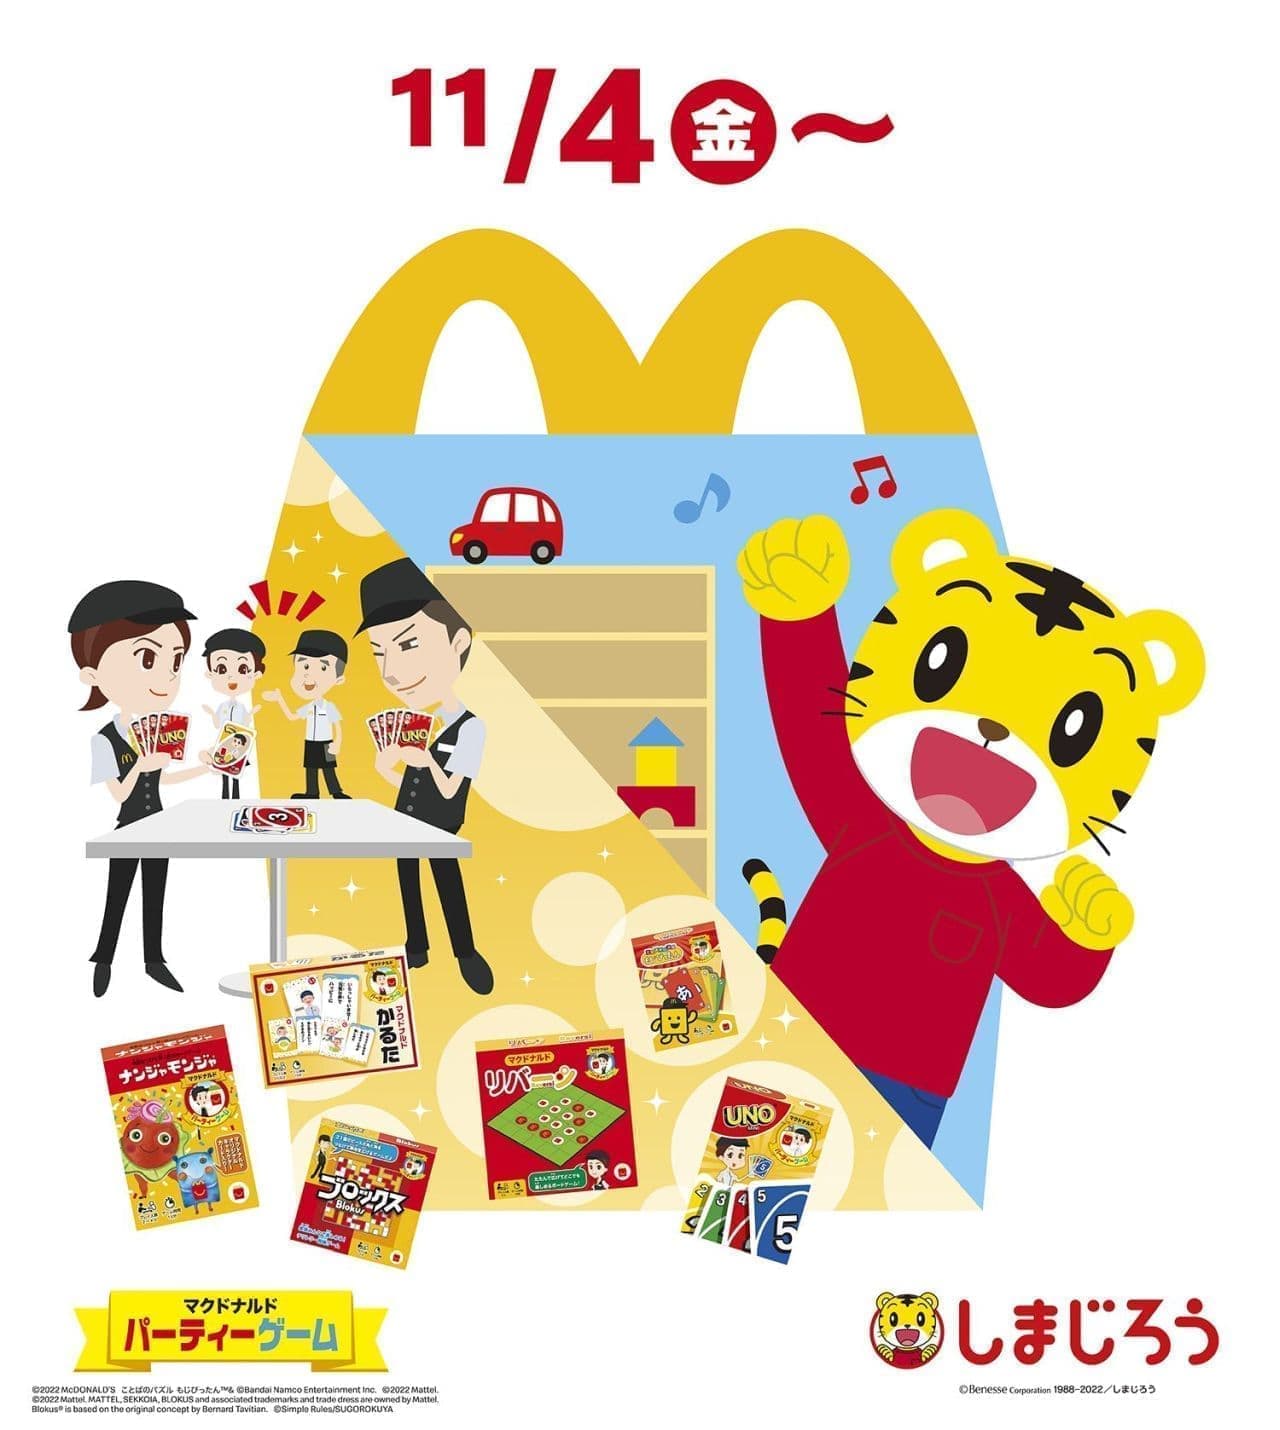 McDonald's Happy Set "Shimajiro" and "McDonald's Party Game".